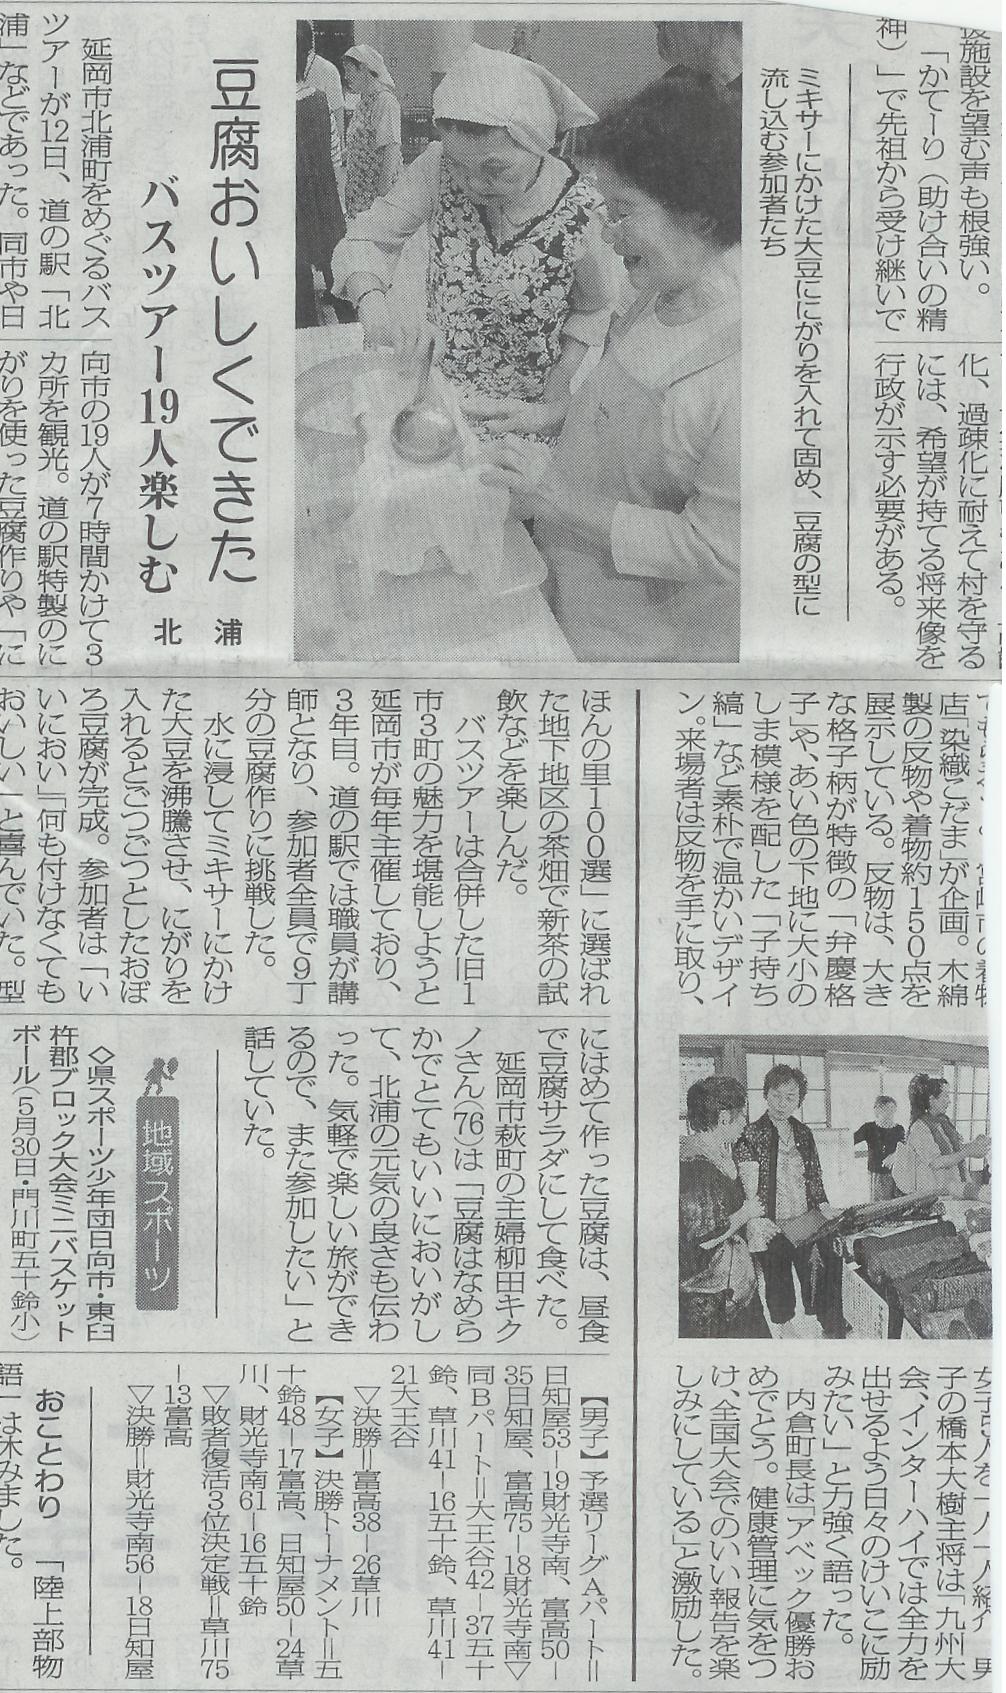 kikuno-yanagita-news-june-13-2009-by-howard-ahner.jpg